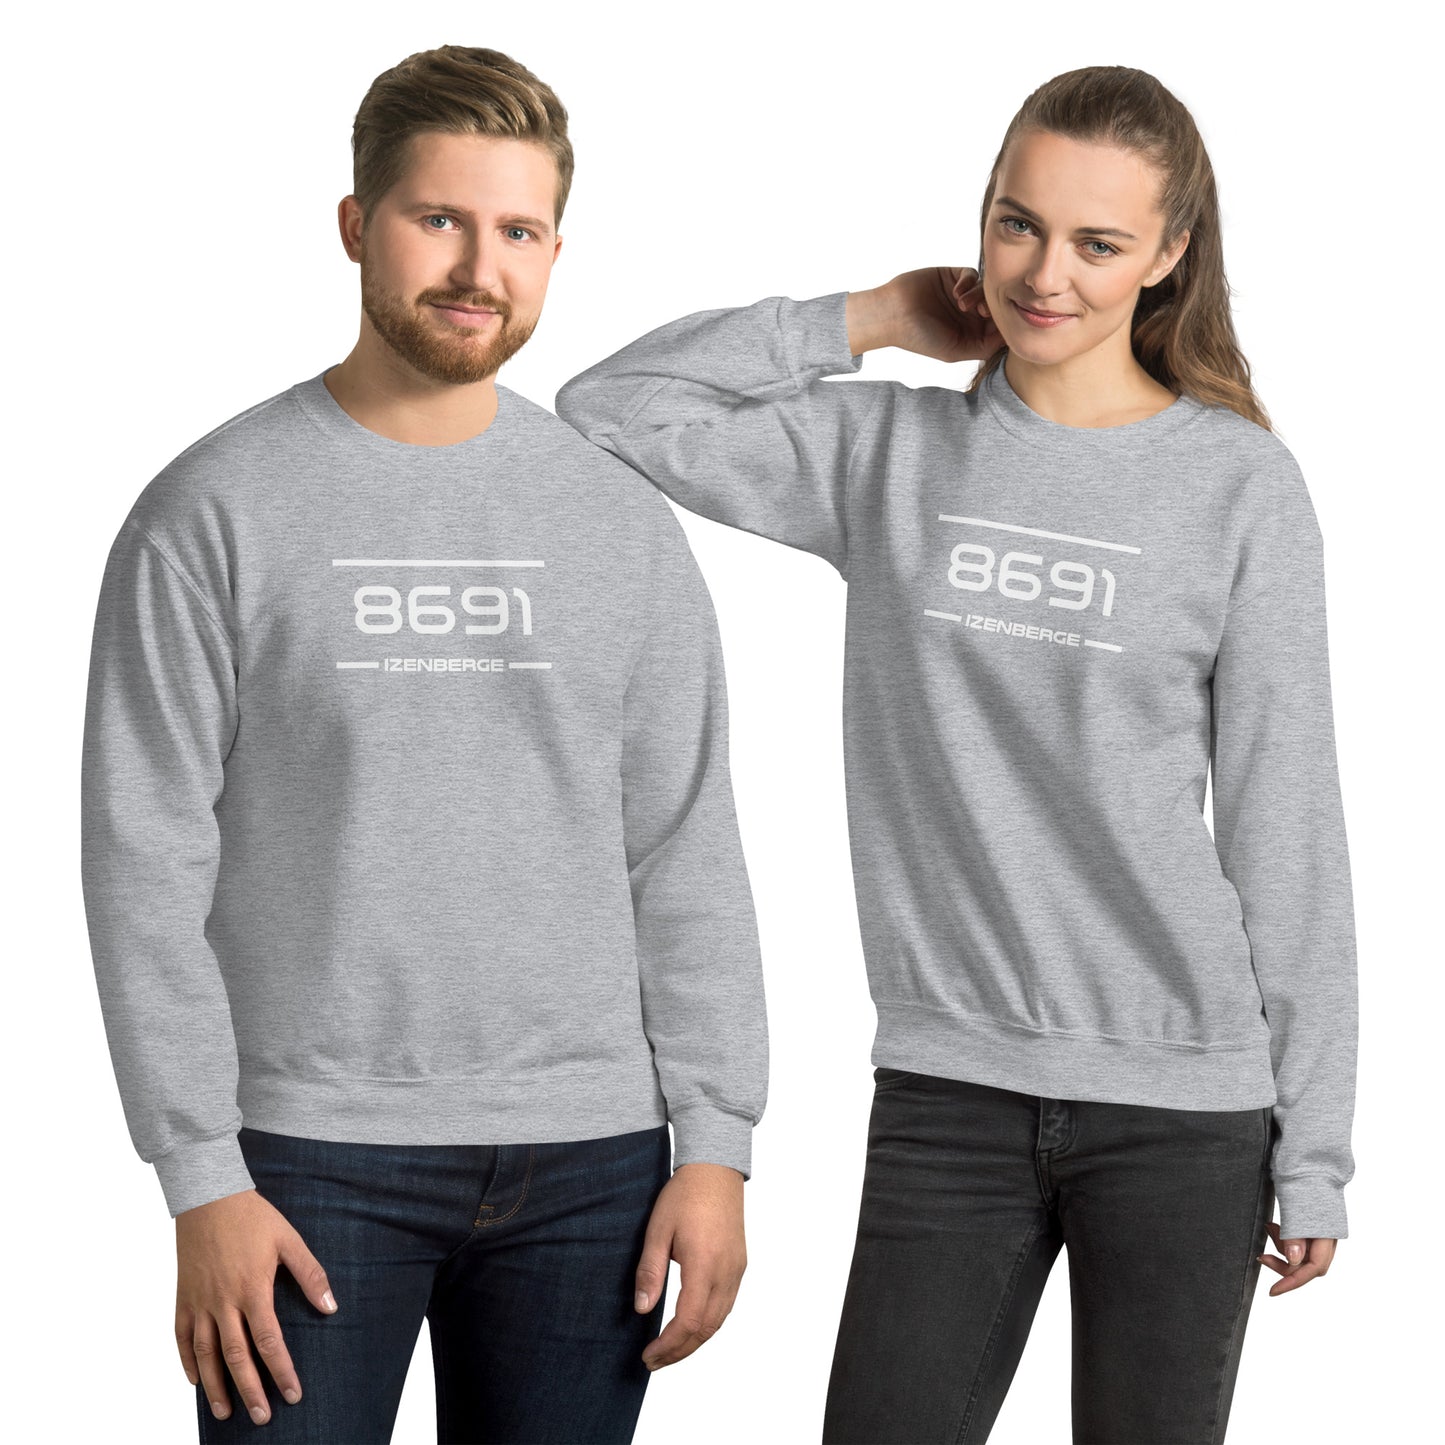 Sweater - 8691 - Izenberge (M/V)